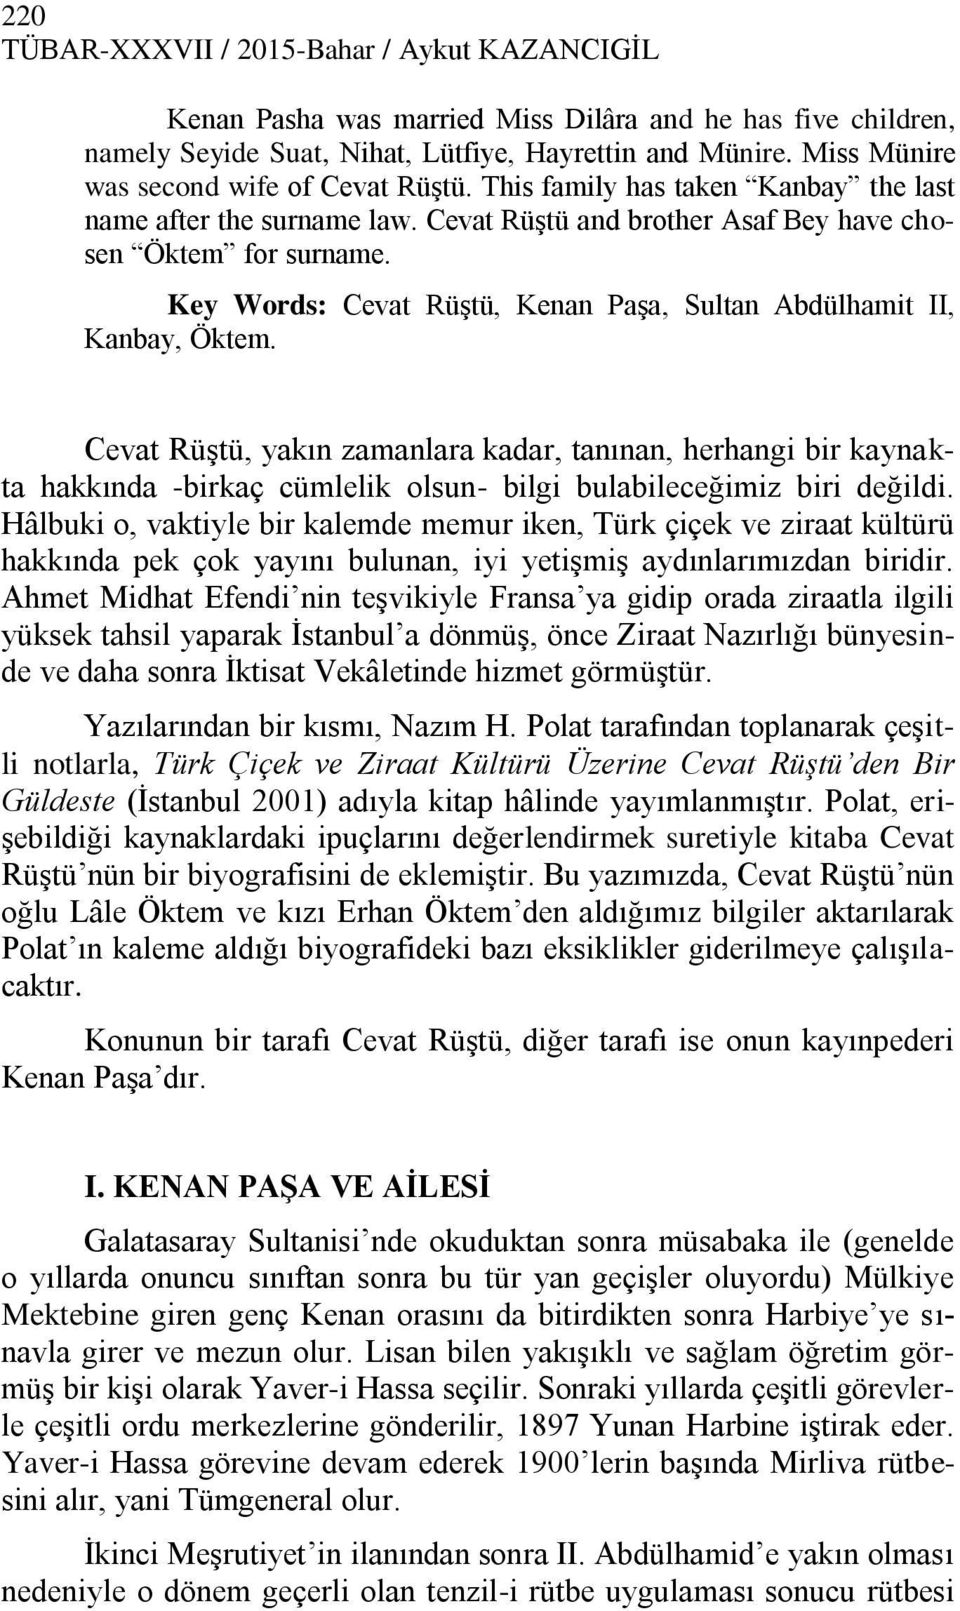 Key Words: Cevat Rüştü, Kenan Paşa, Sultan Abdülhamit II, Kanbay, Öktem.